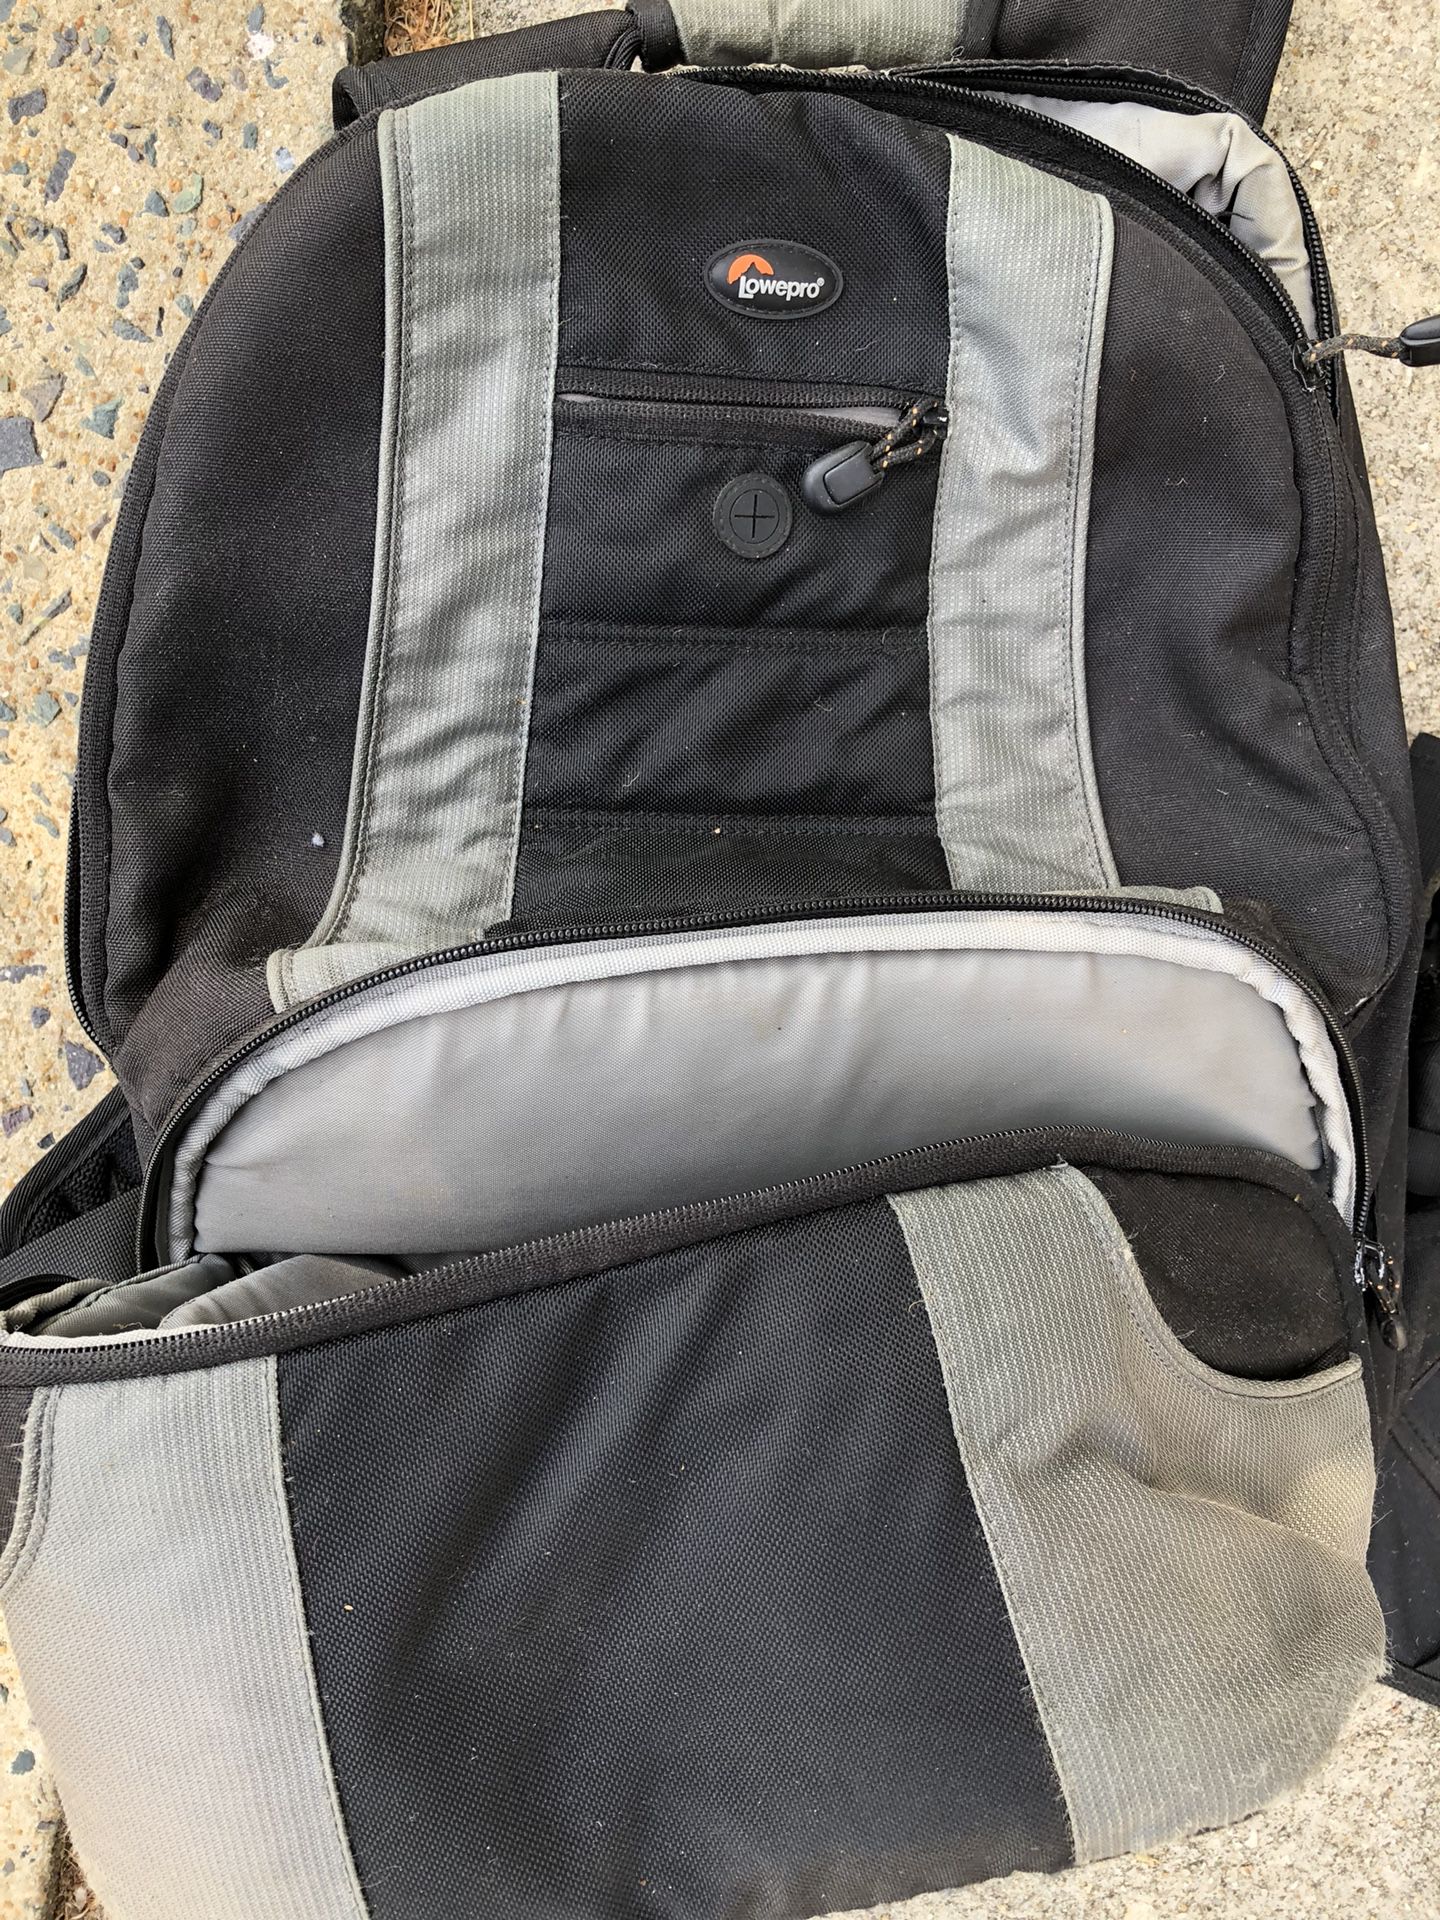 Lowe Pro Backpack